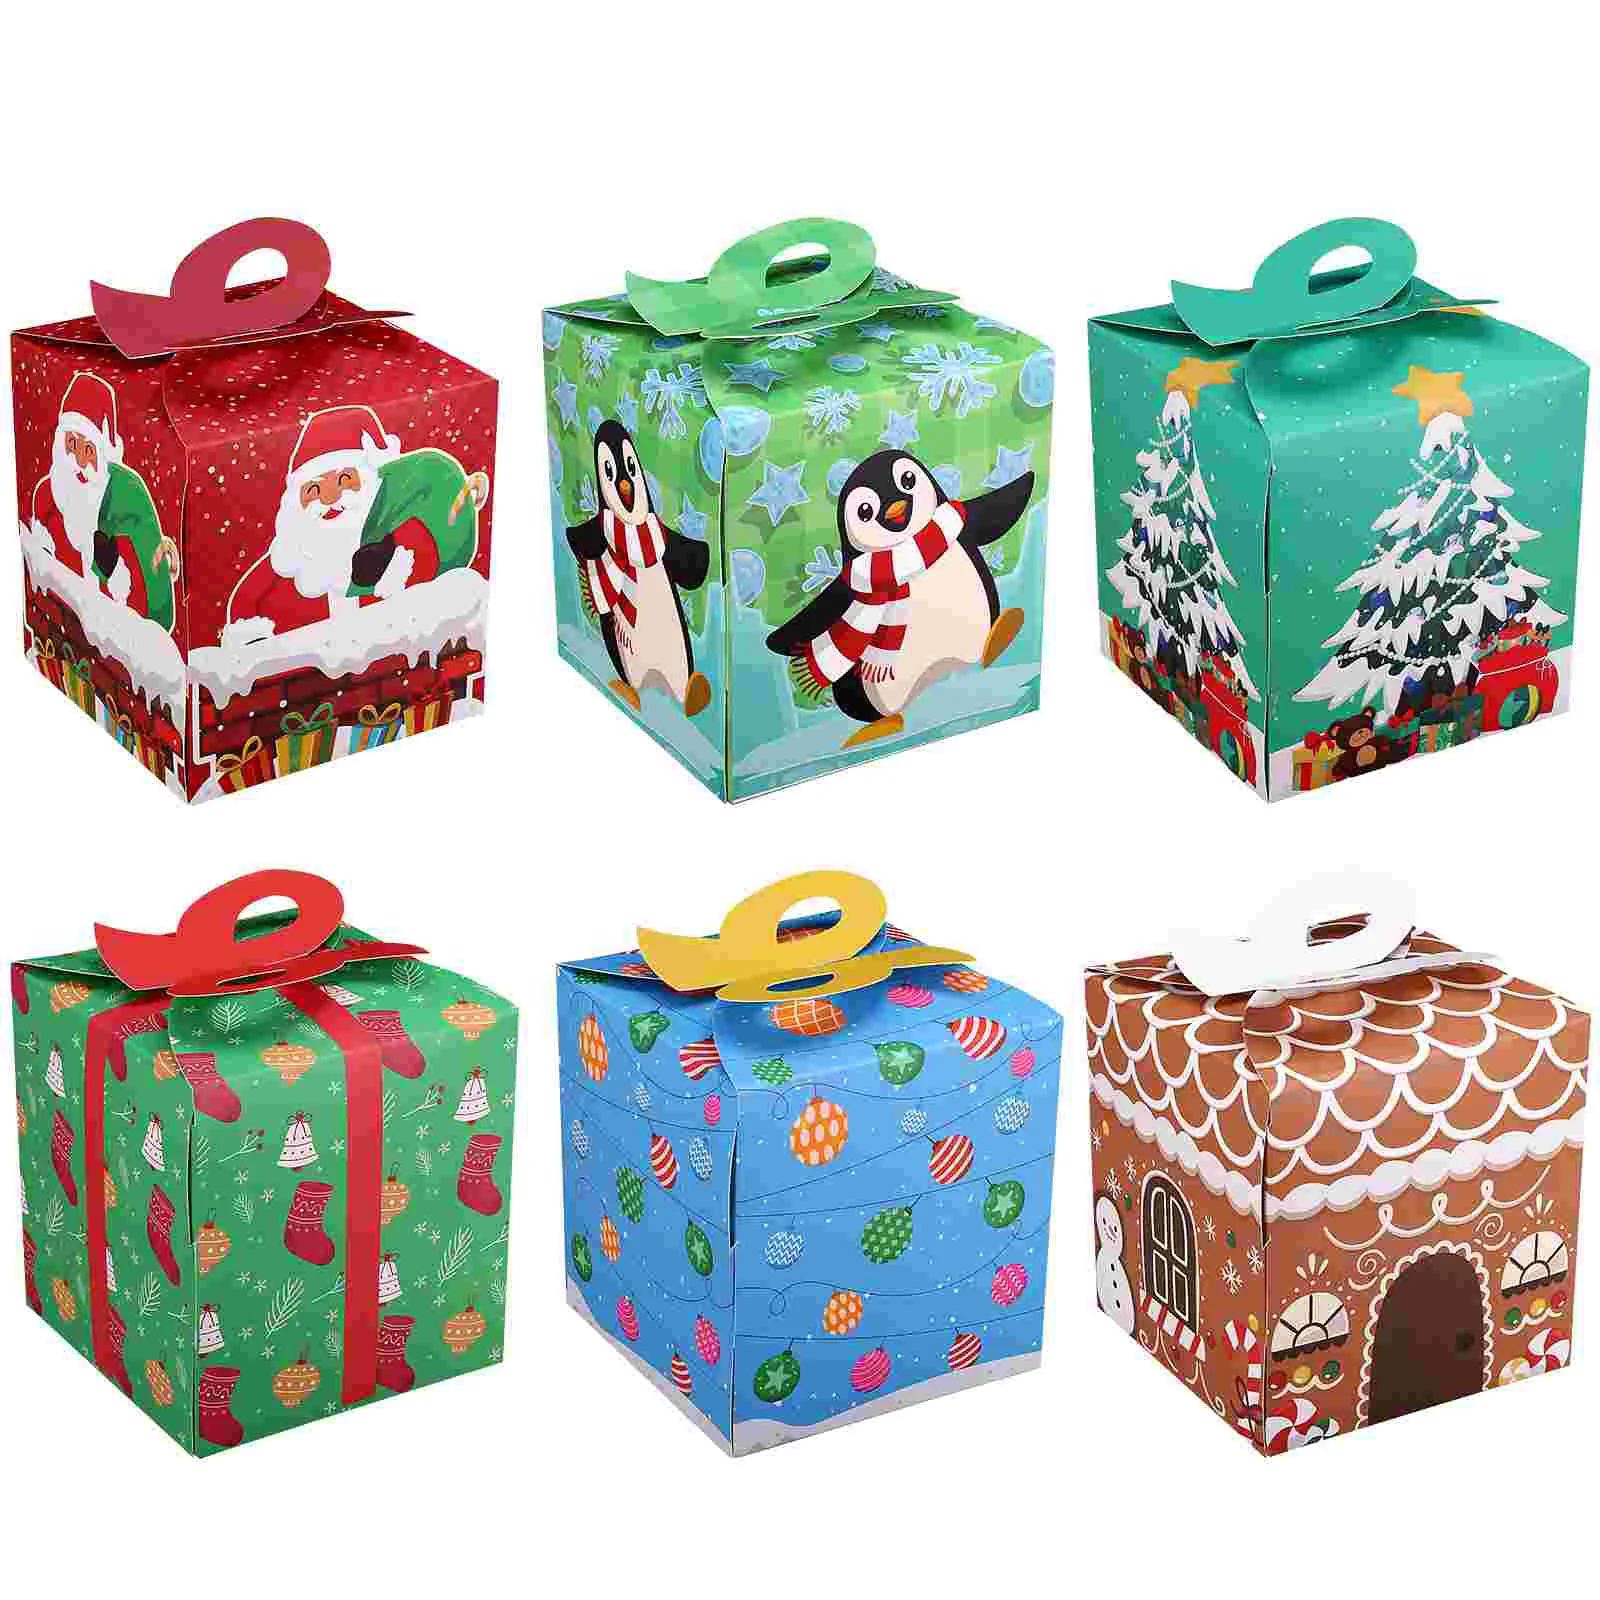 

Рождественские коробки с крышками, рождественские подарочные коробки для печенья, рождественские коробки для подарков, рождественские украшения, рождественские коробки для печенья